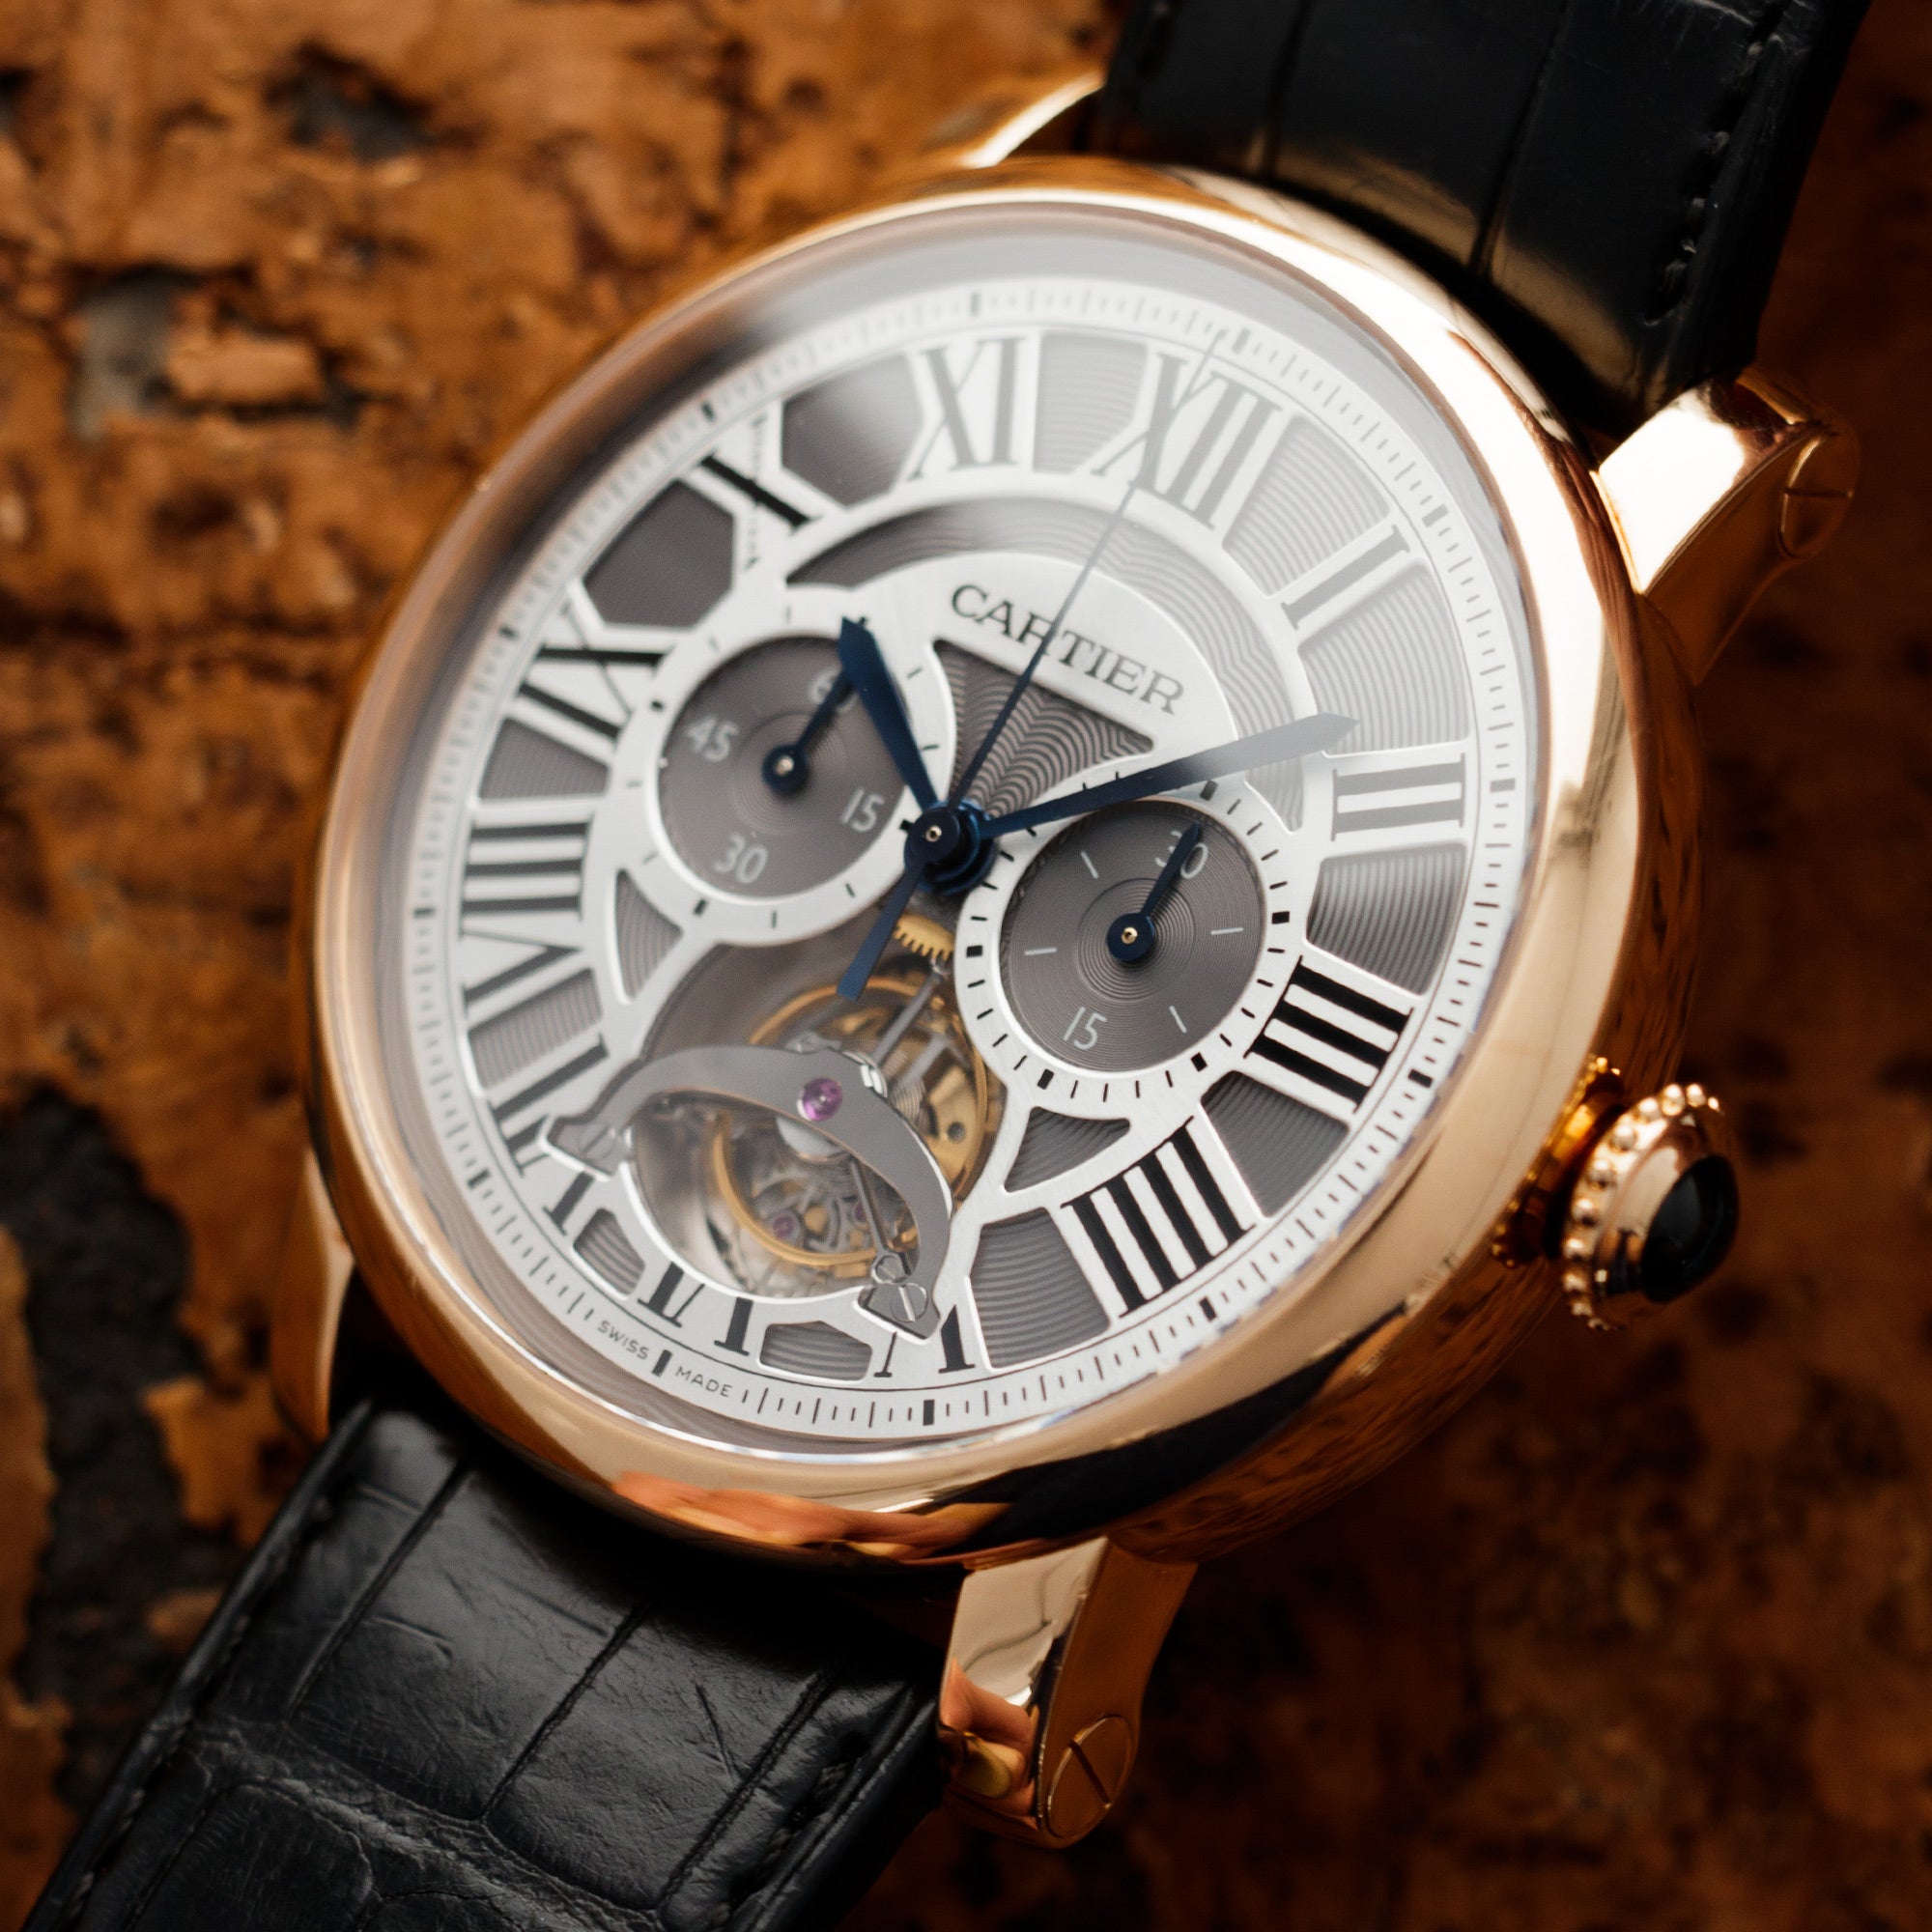 Cartier - Cartier Rose Gold Rotonde Tourbillon Monopusher Chronograph Watch W1580032 - The Keystone Watches